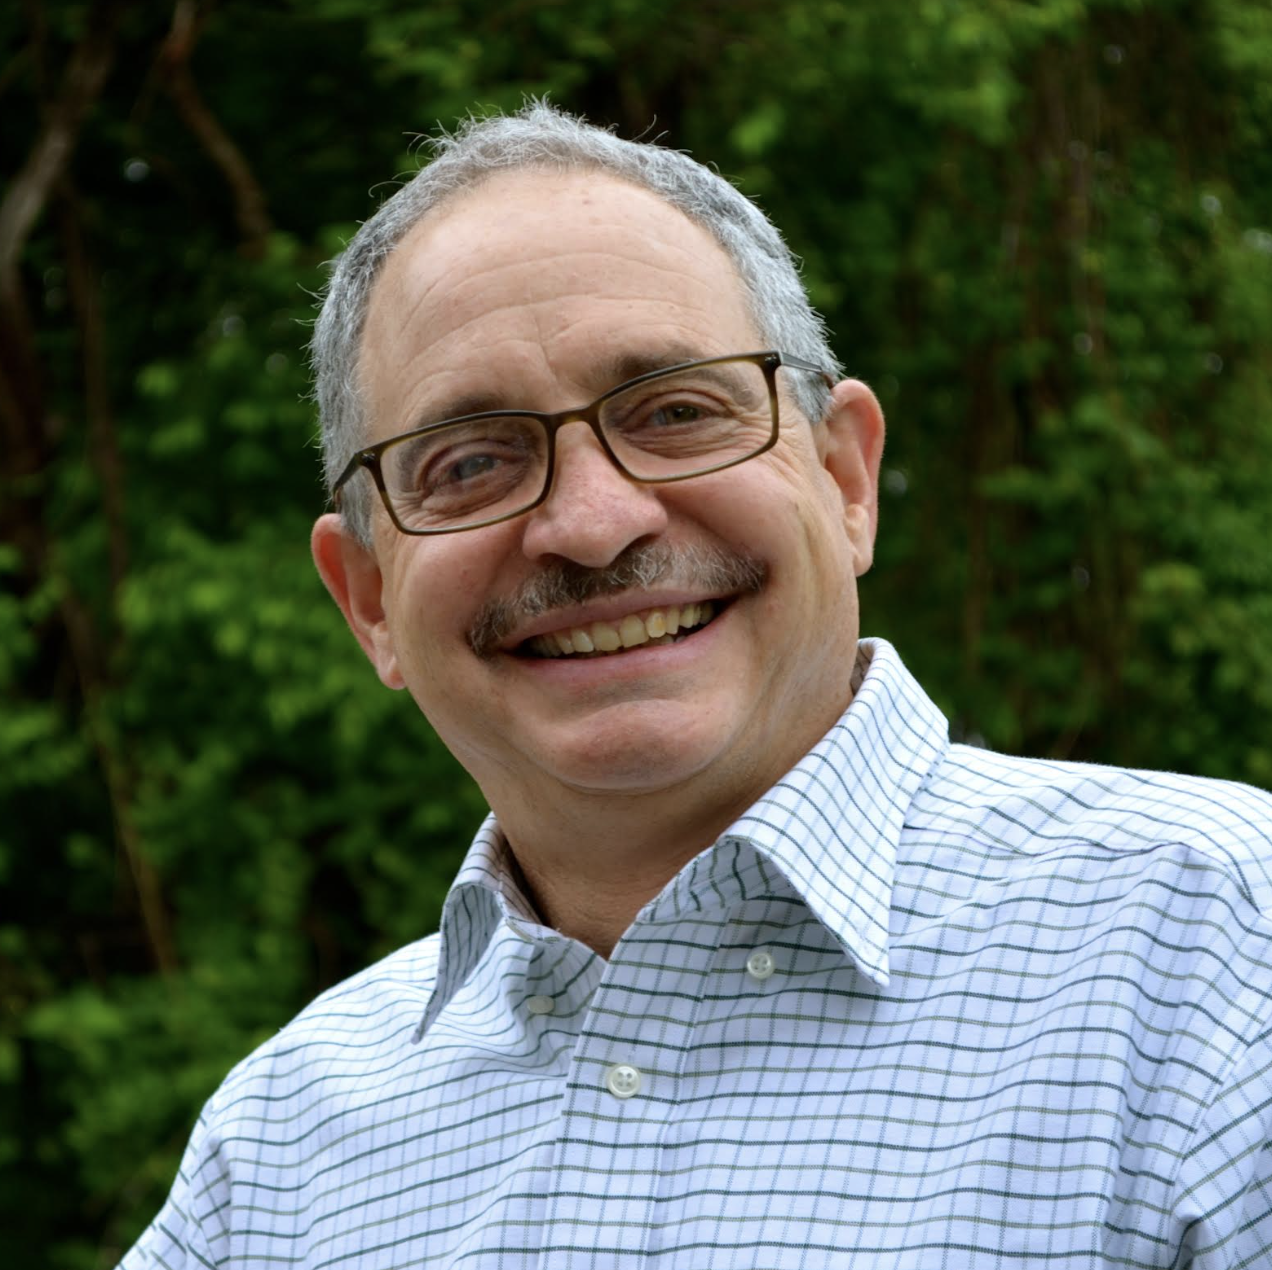 David Kaplan is the Stern Family Endowed Professor of Engineering at Tufts University,